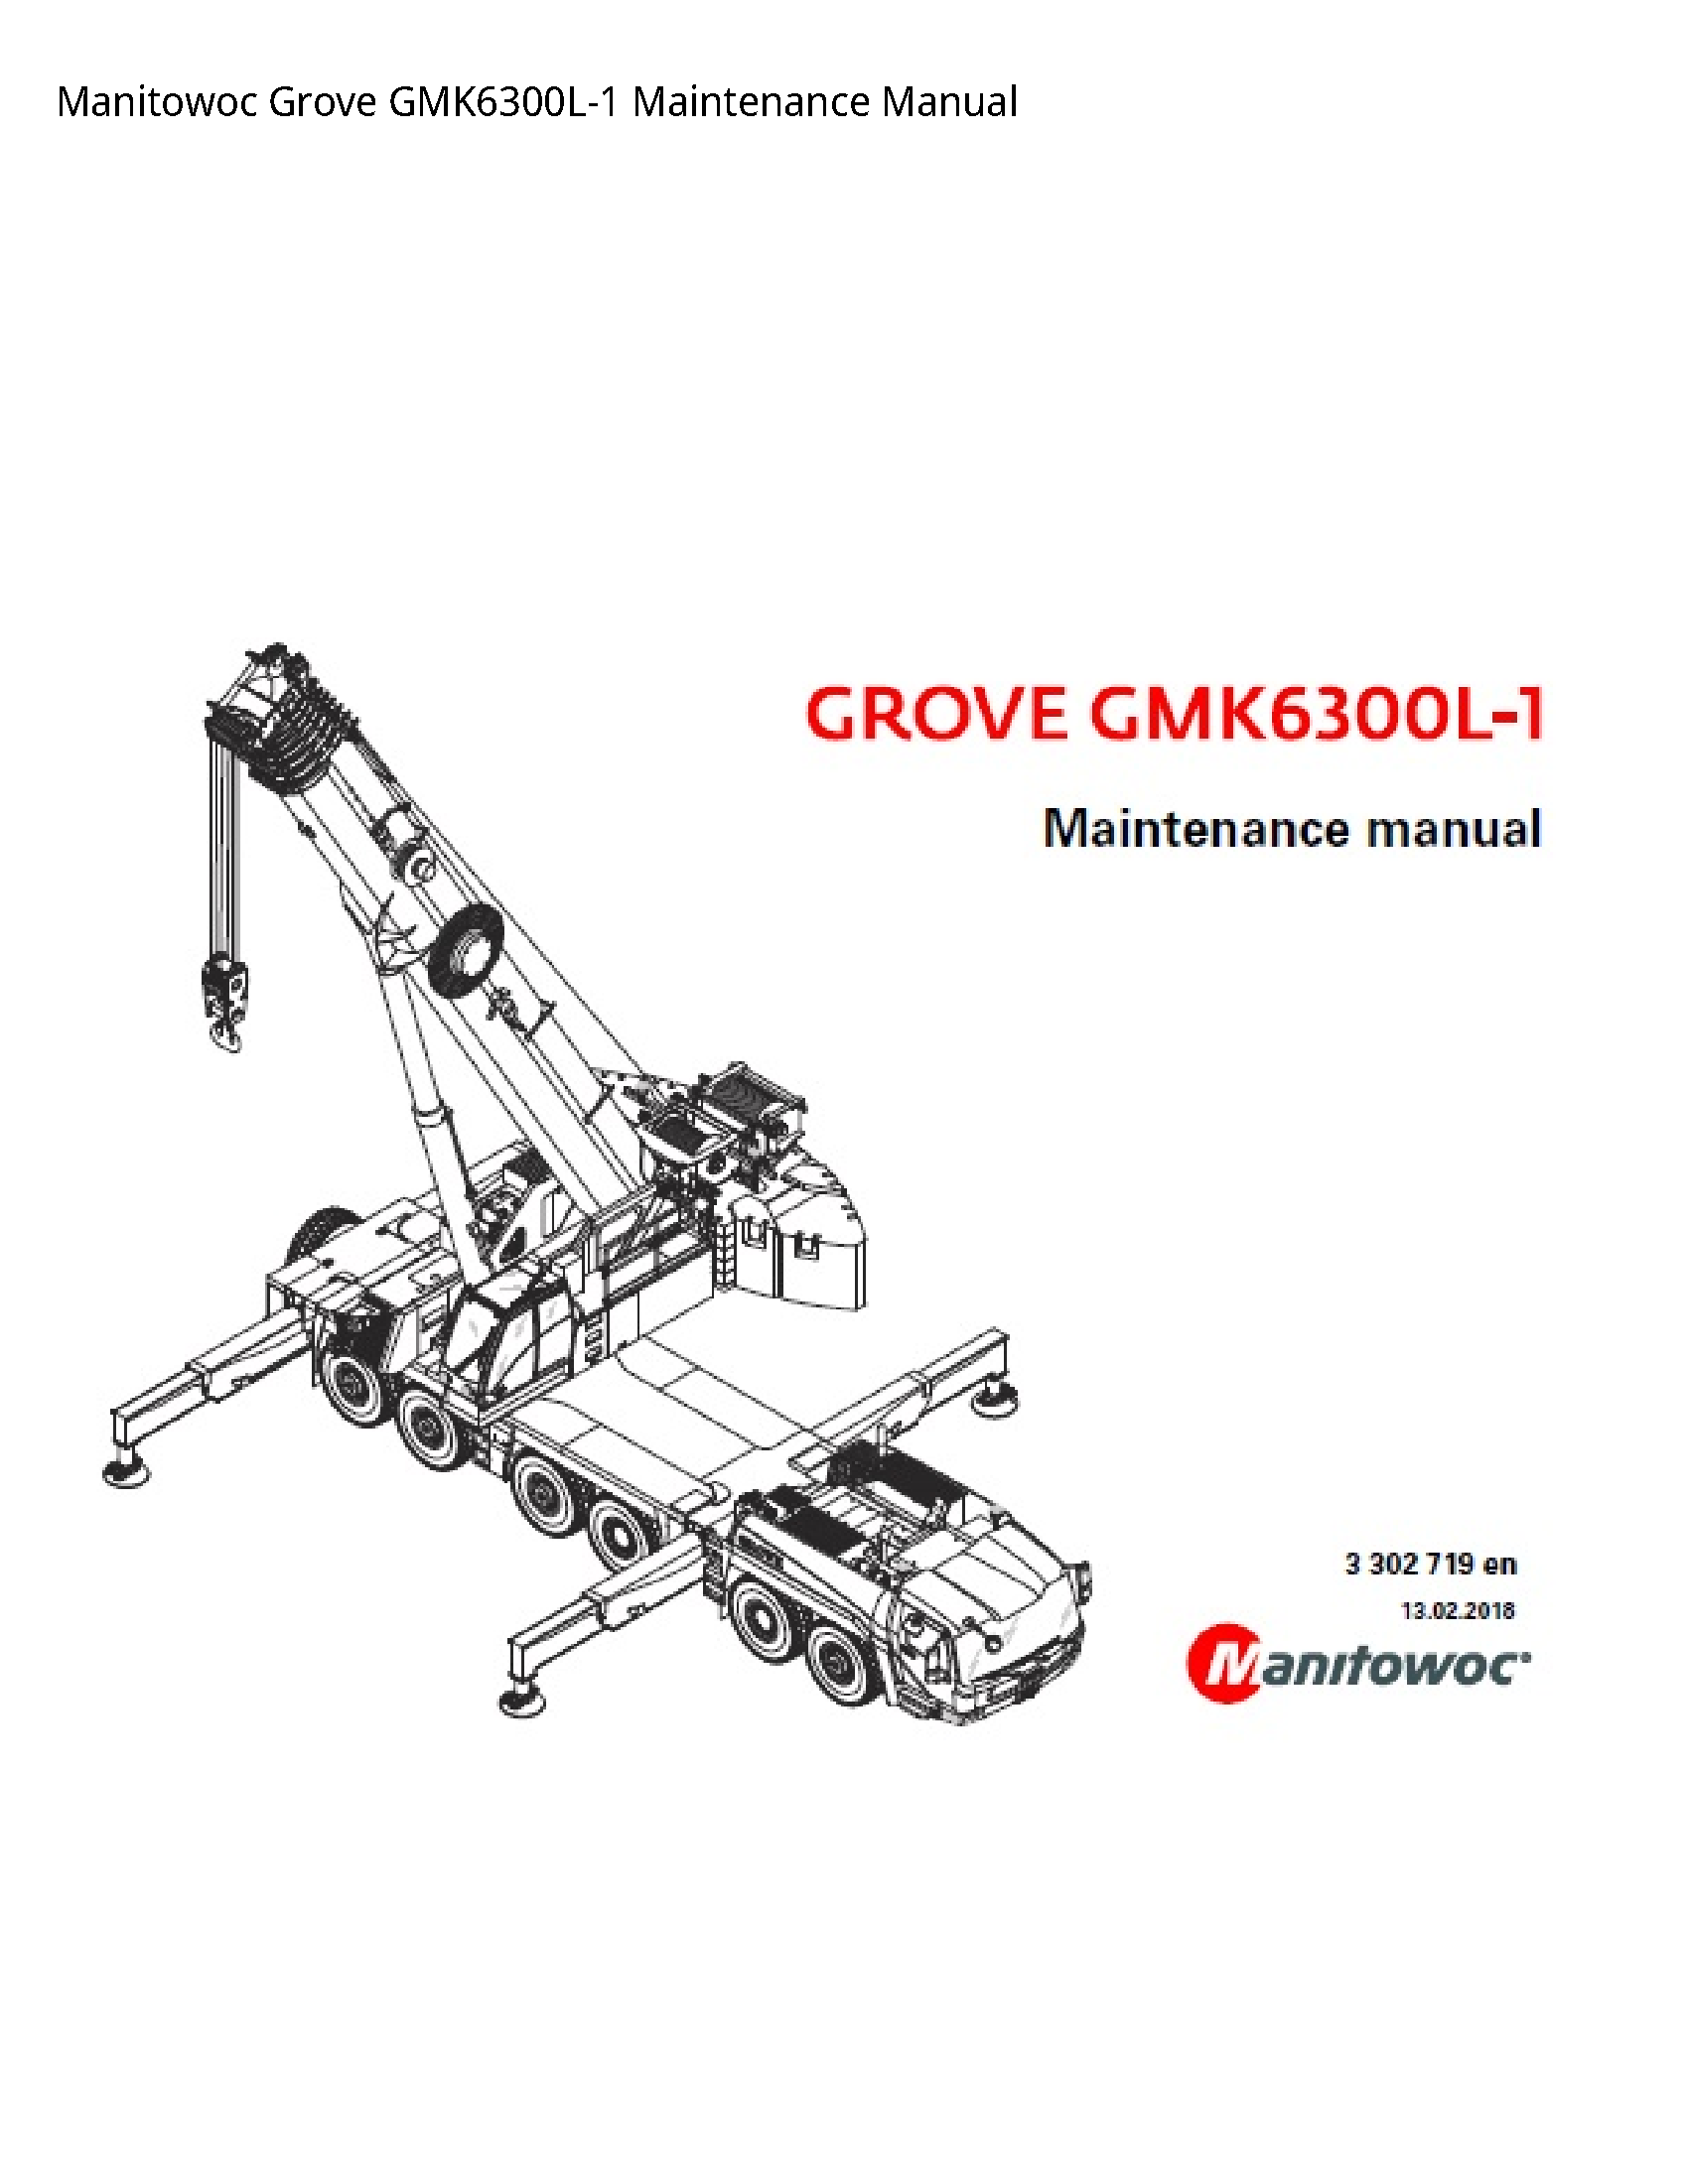 Manitowoc GMK6300L-1 Grove Maintenance manual